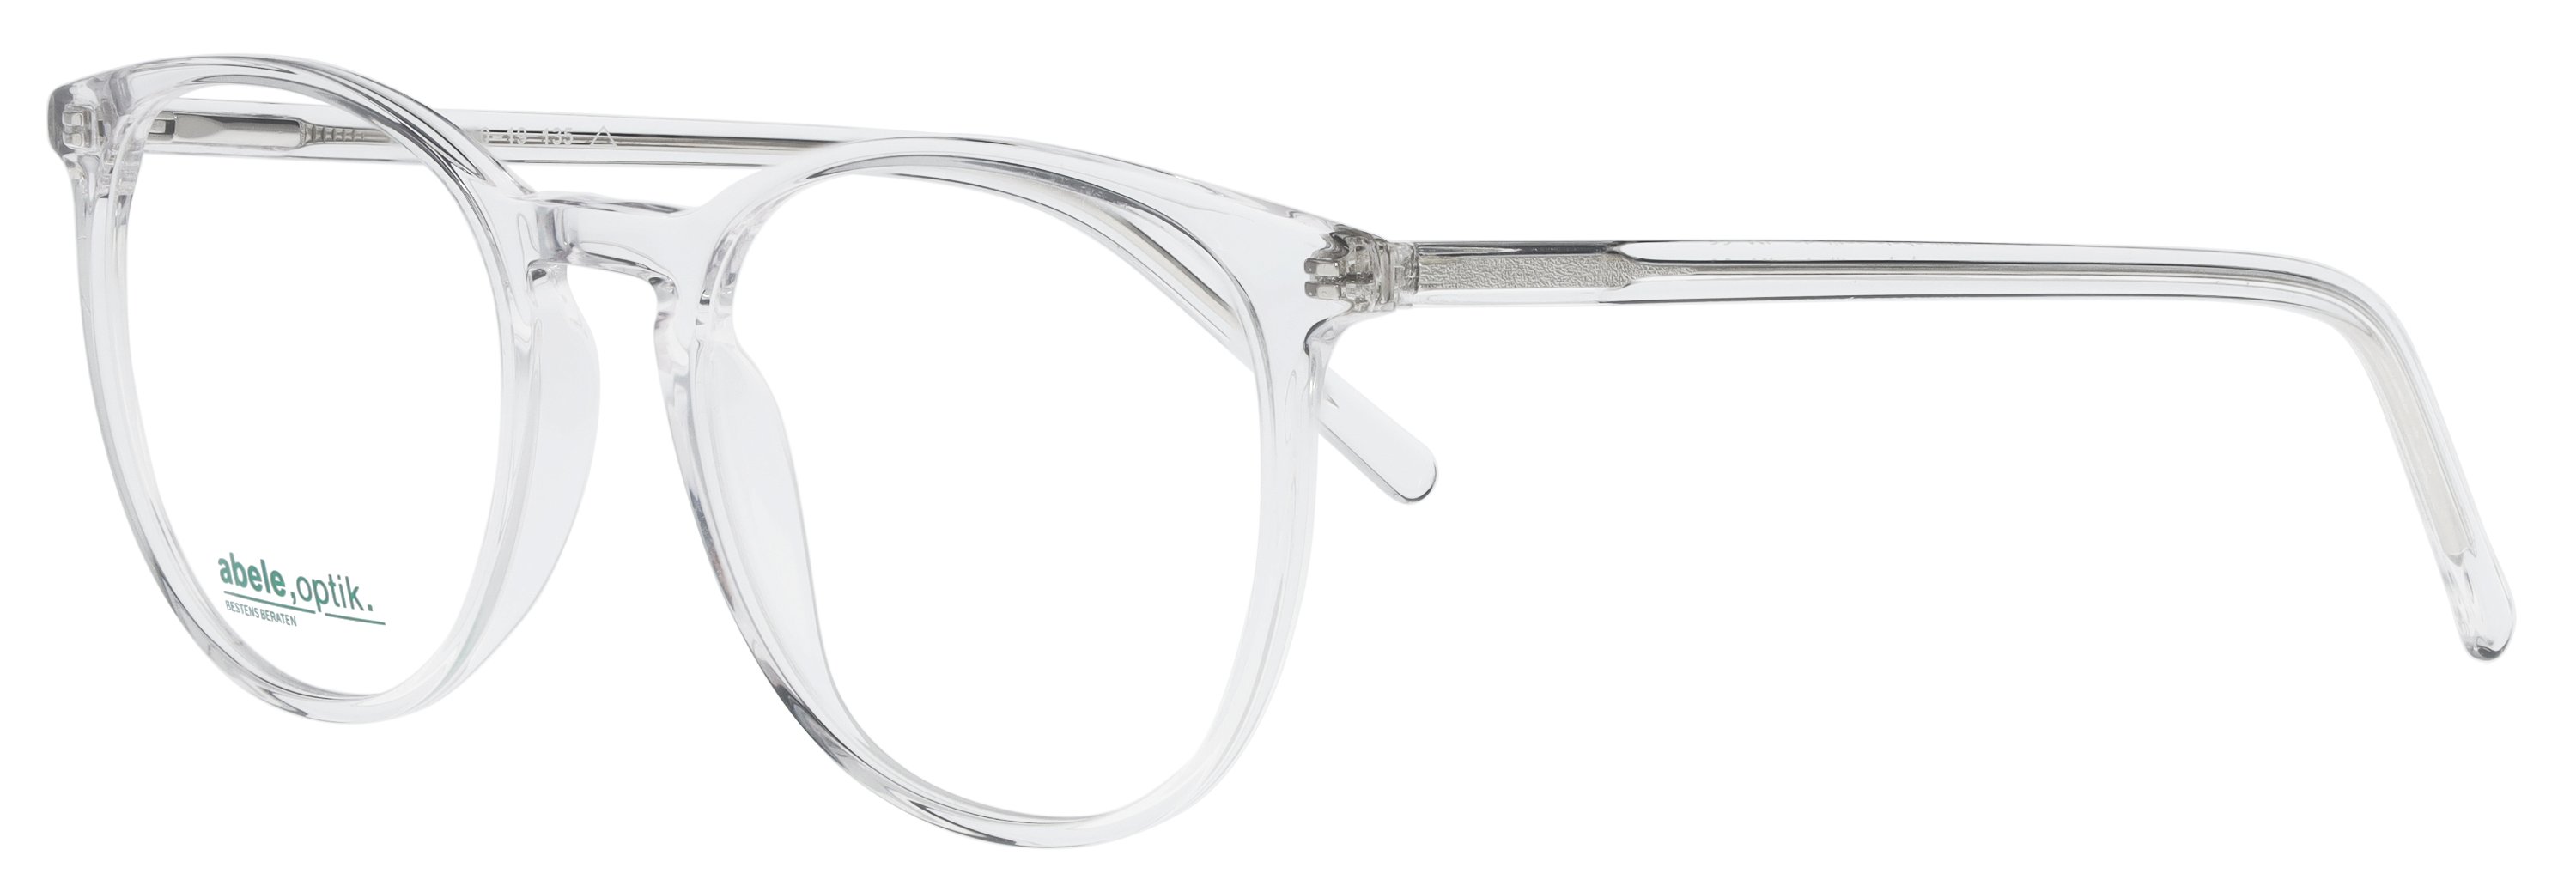 abele optik Brille für Damen klar transparent 147521 